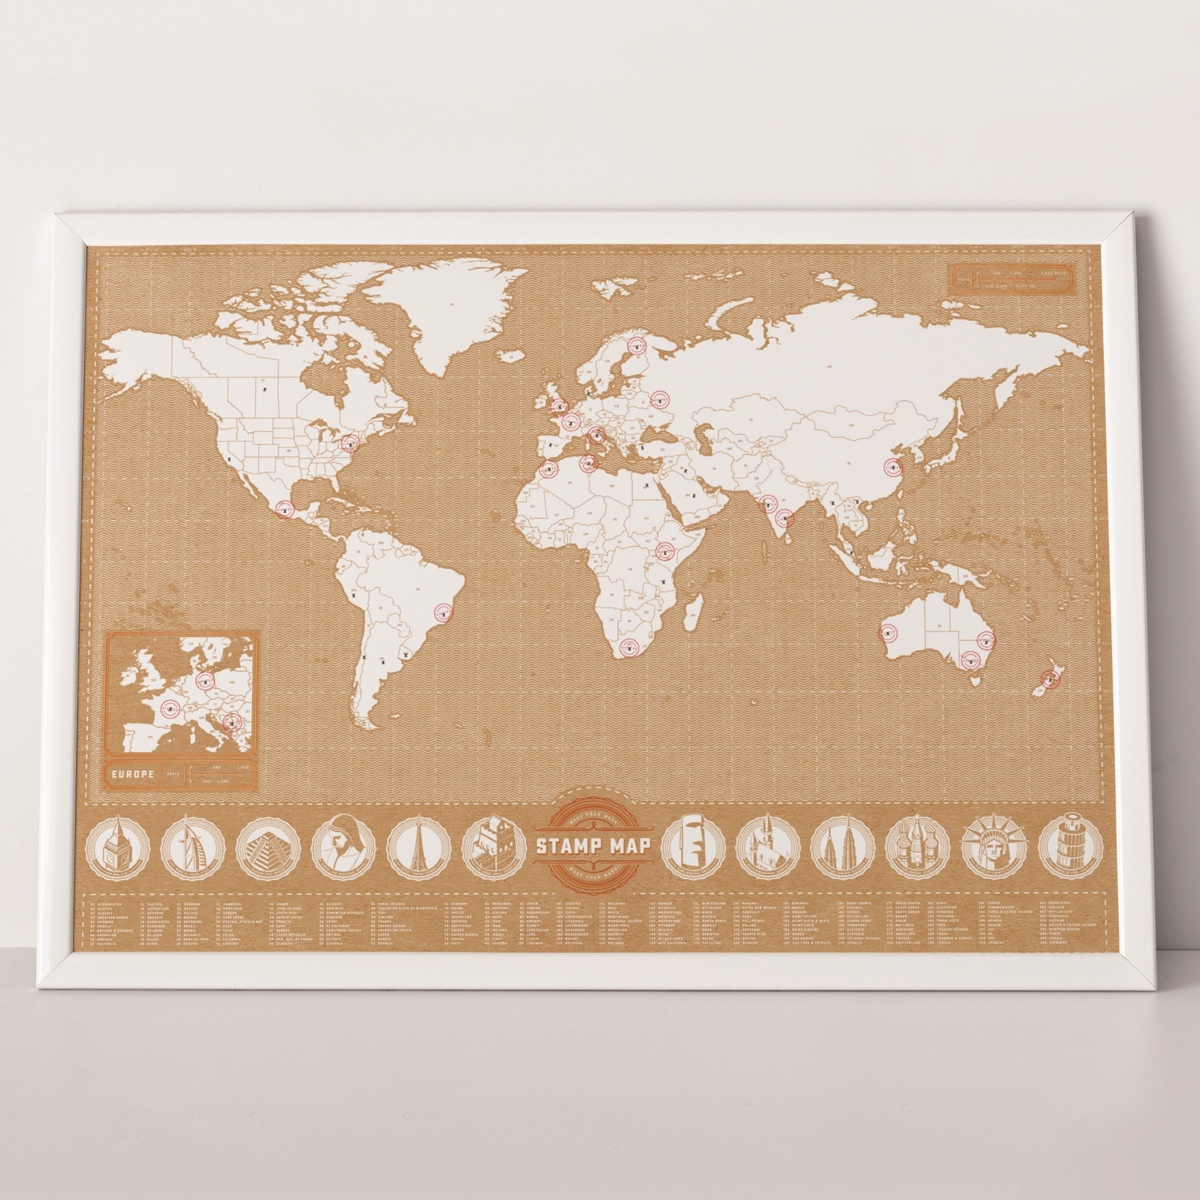 stamp-map-1